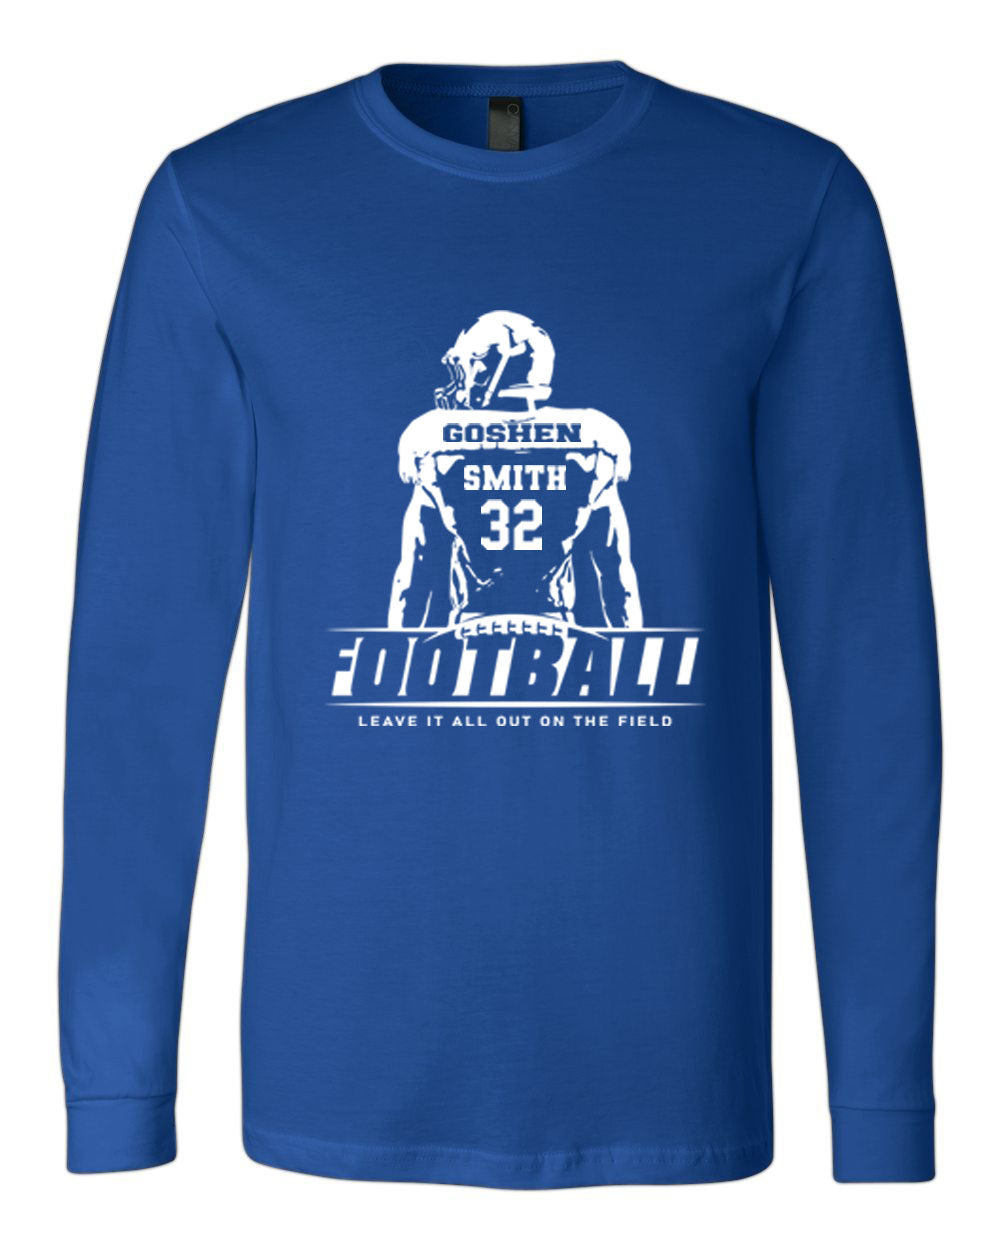 Goshen Football Design 5 Long Sleeve Shirt